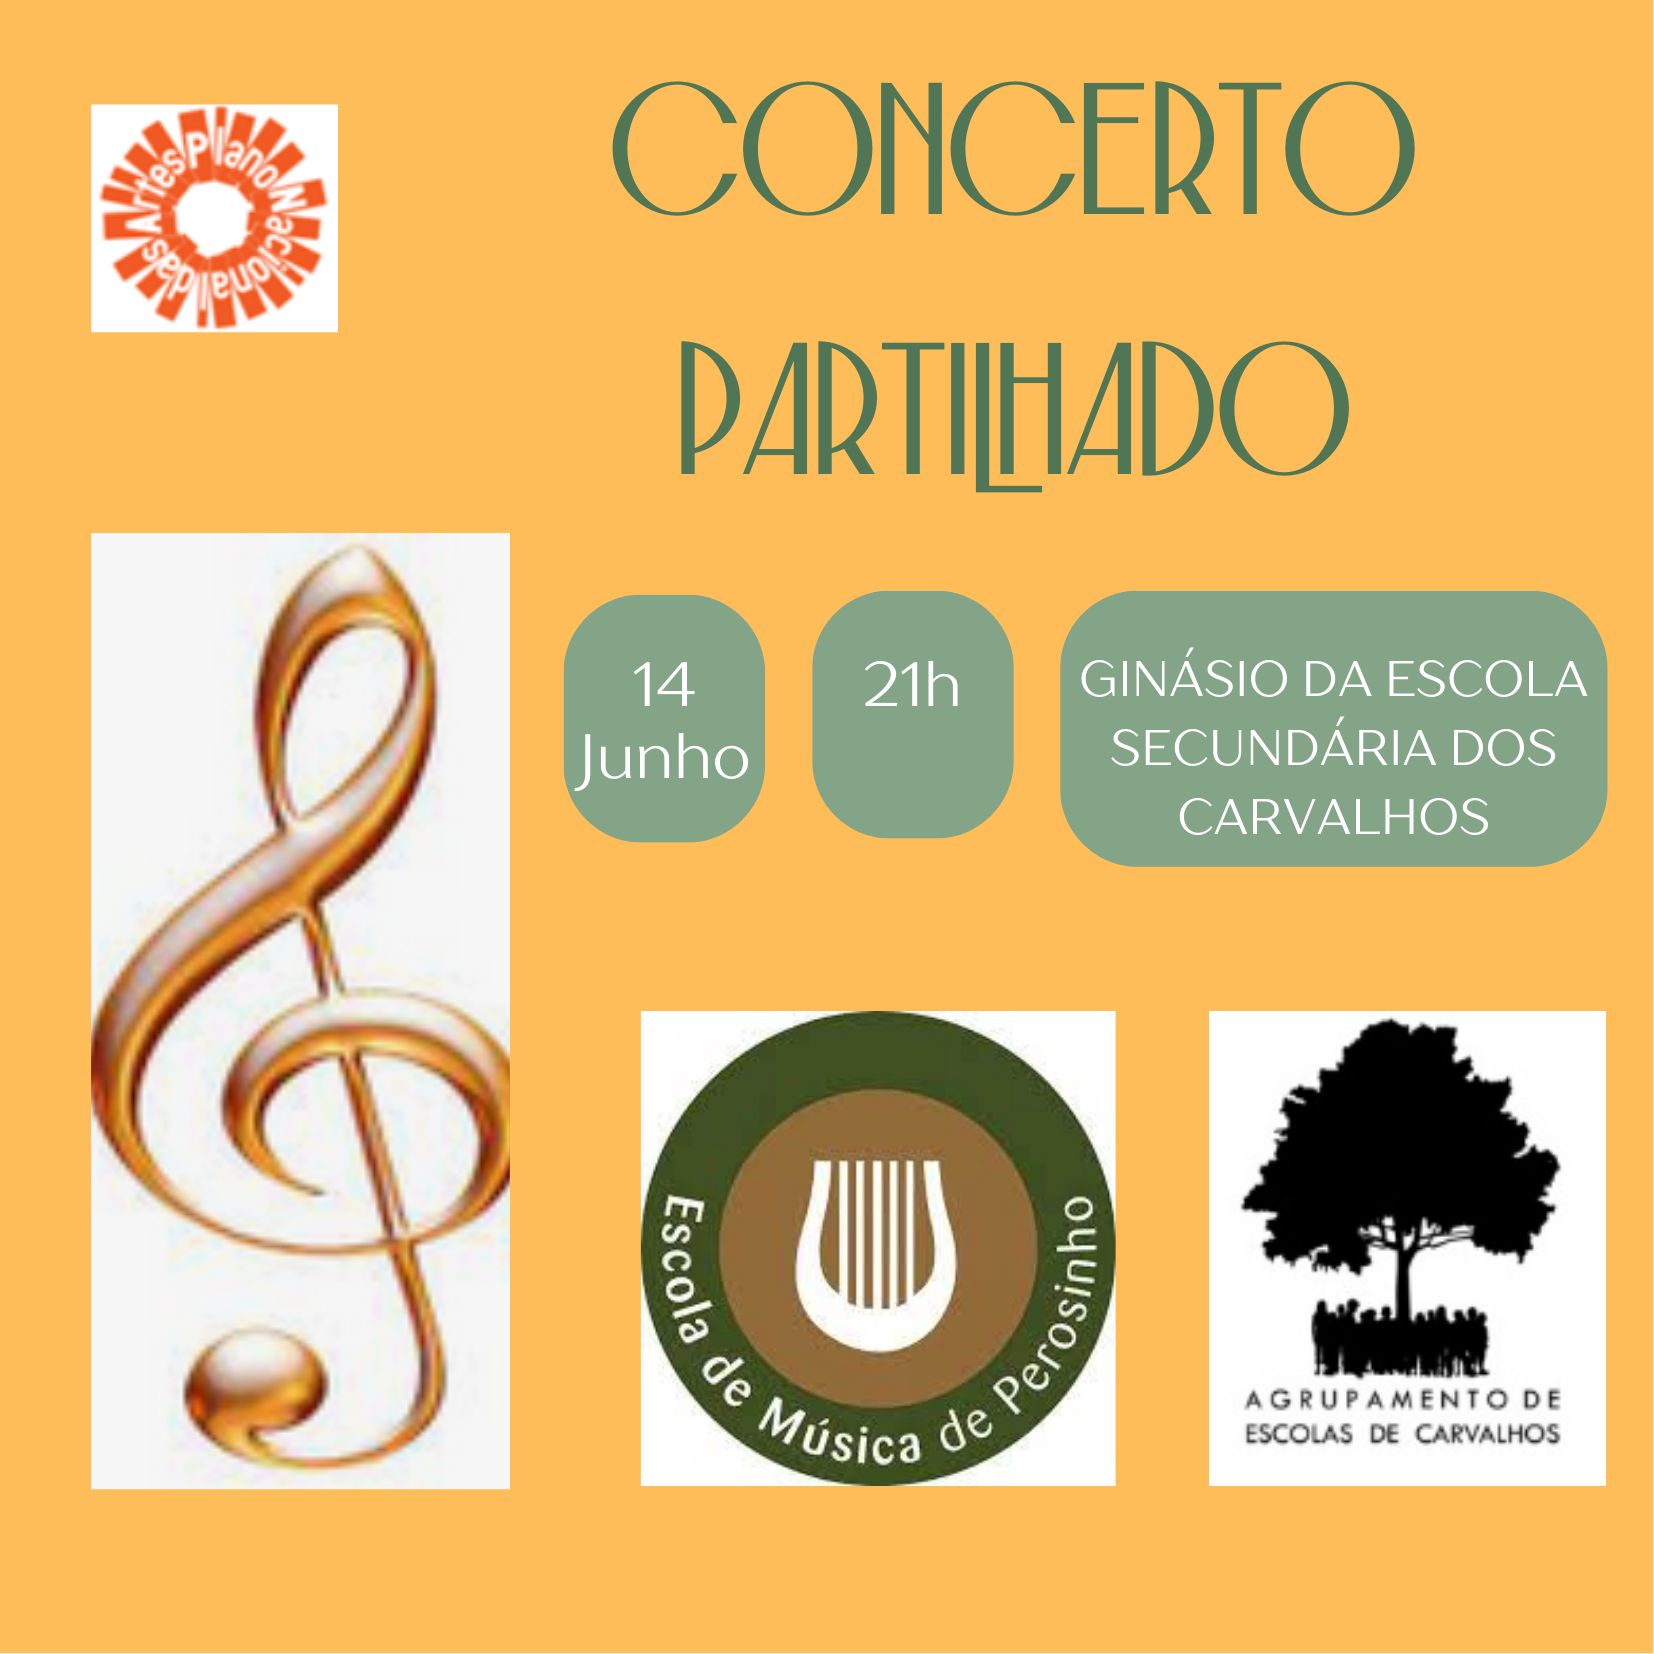 Concerto_partilhado_Convite.png